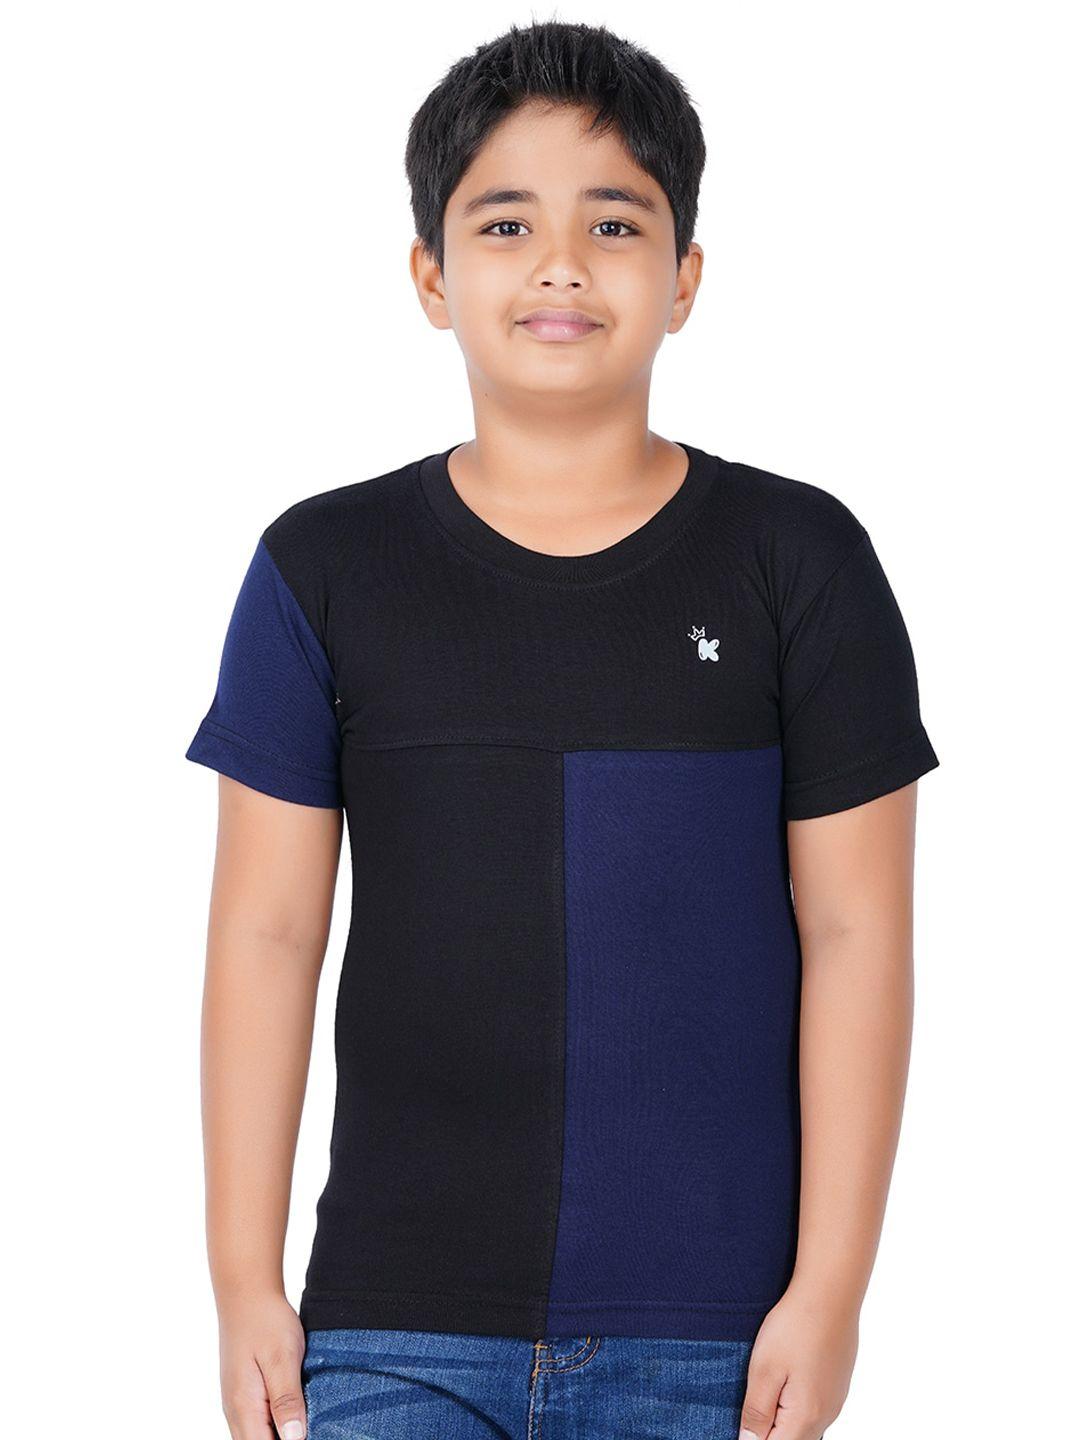 kiddeo boys navy blue & black colourblocked slim fit t-shirt